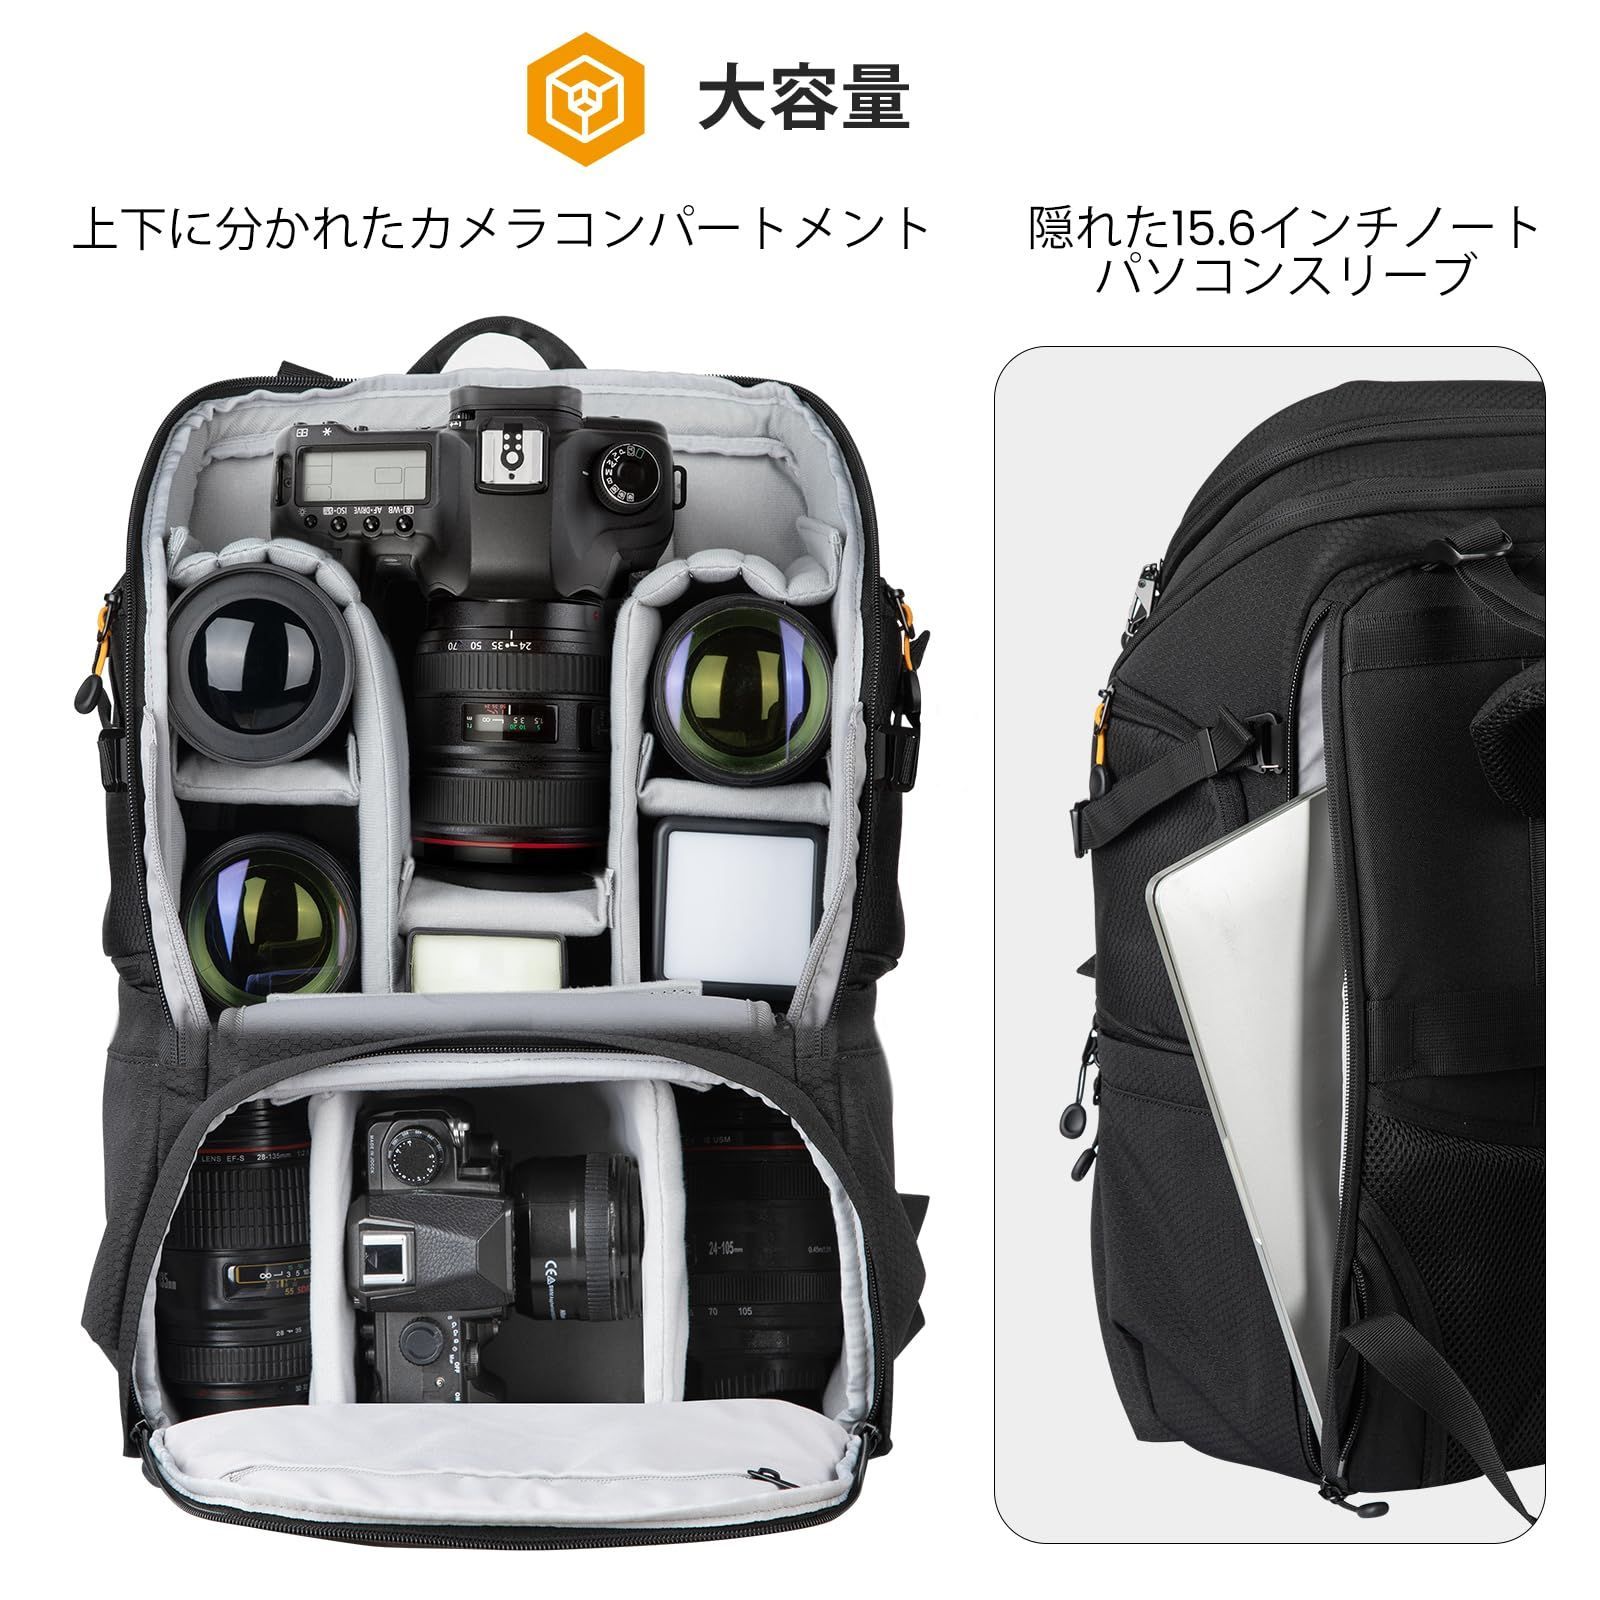 [TARION] カメラバッグ：カメラリュックサック 調節可能なカメラリュックサック 一眼レフカメラ専用バッグ 大容量カメラリュック  男女兼用一眼レフバッグ 親子カメラバッグ モジュラーデザイン フォトバッグ カメラバッグ おしゃれ HX-XL